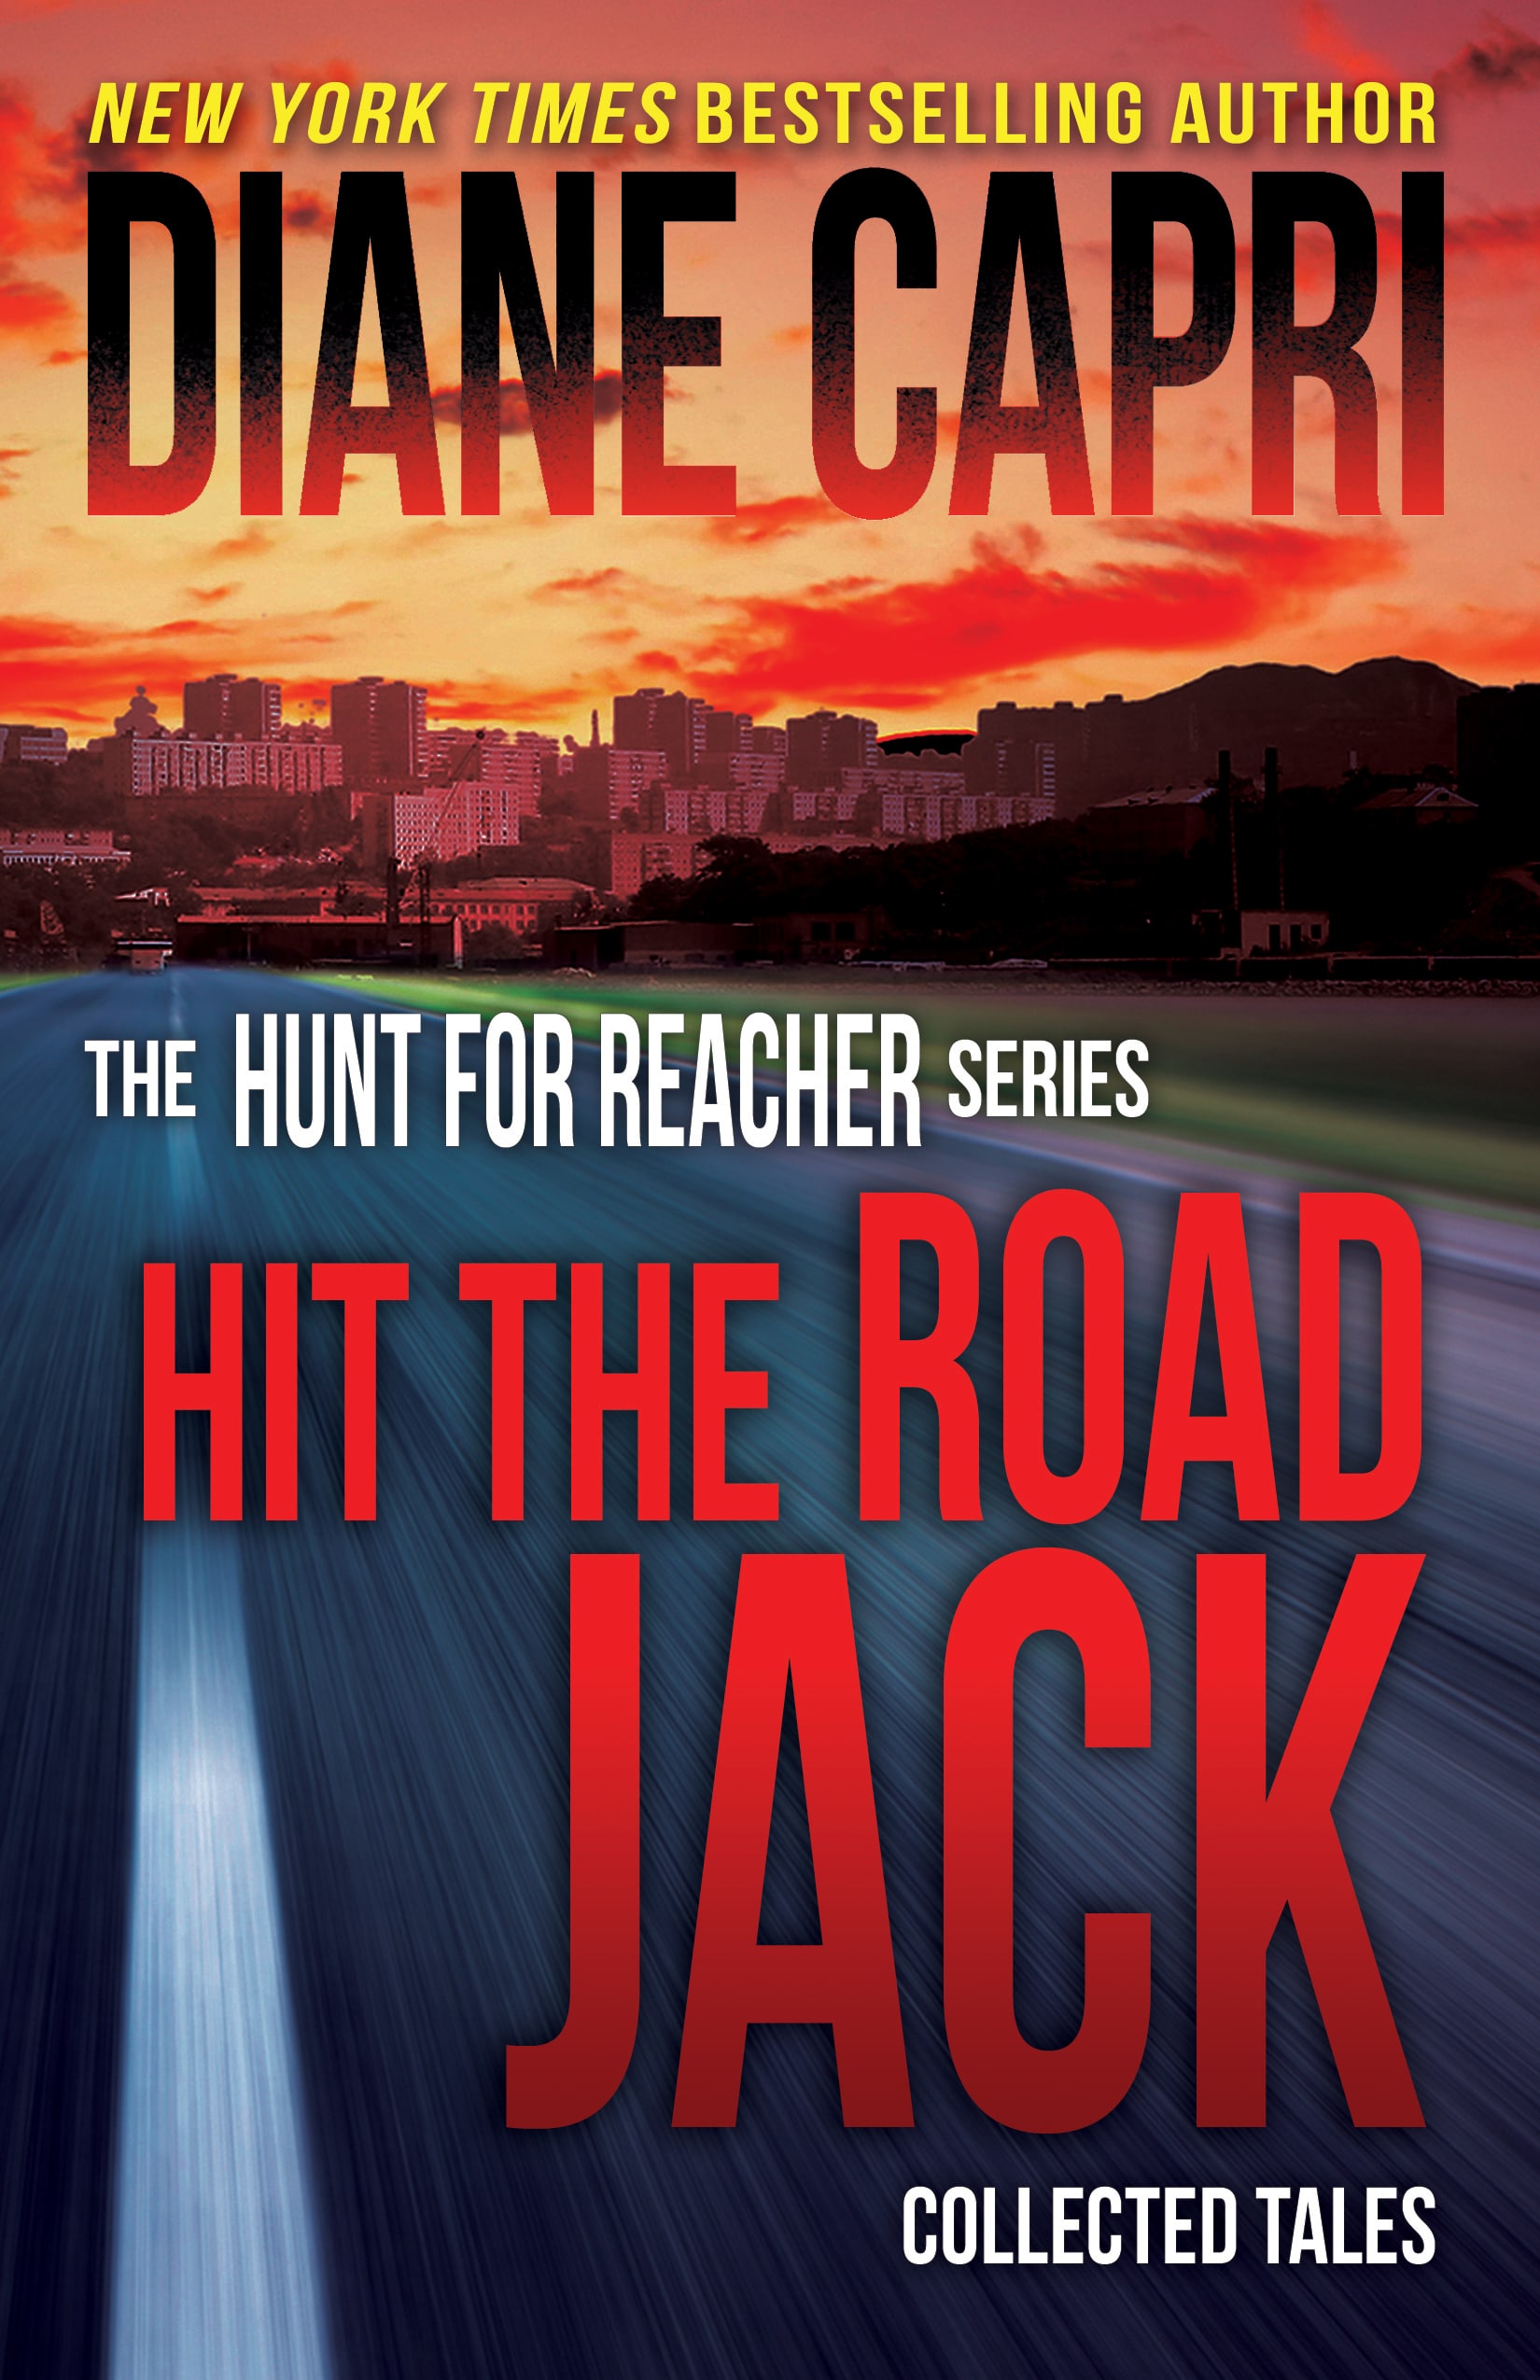 Jack and Joe: Volume 6 by Capri Diane Book The Hunt for Jack Reacher Series 